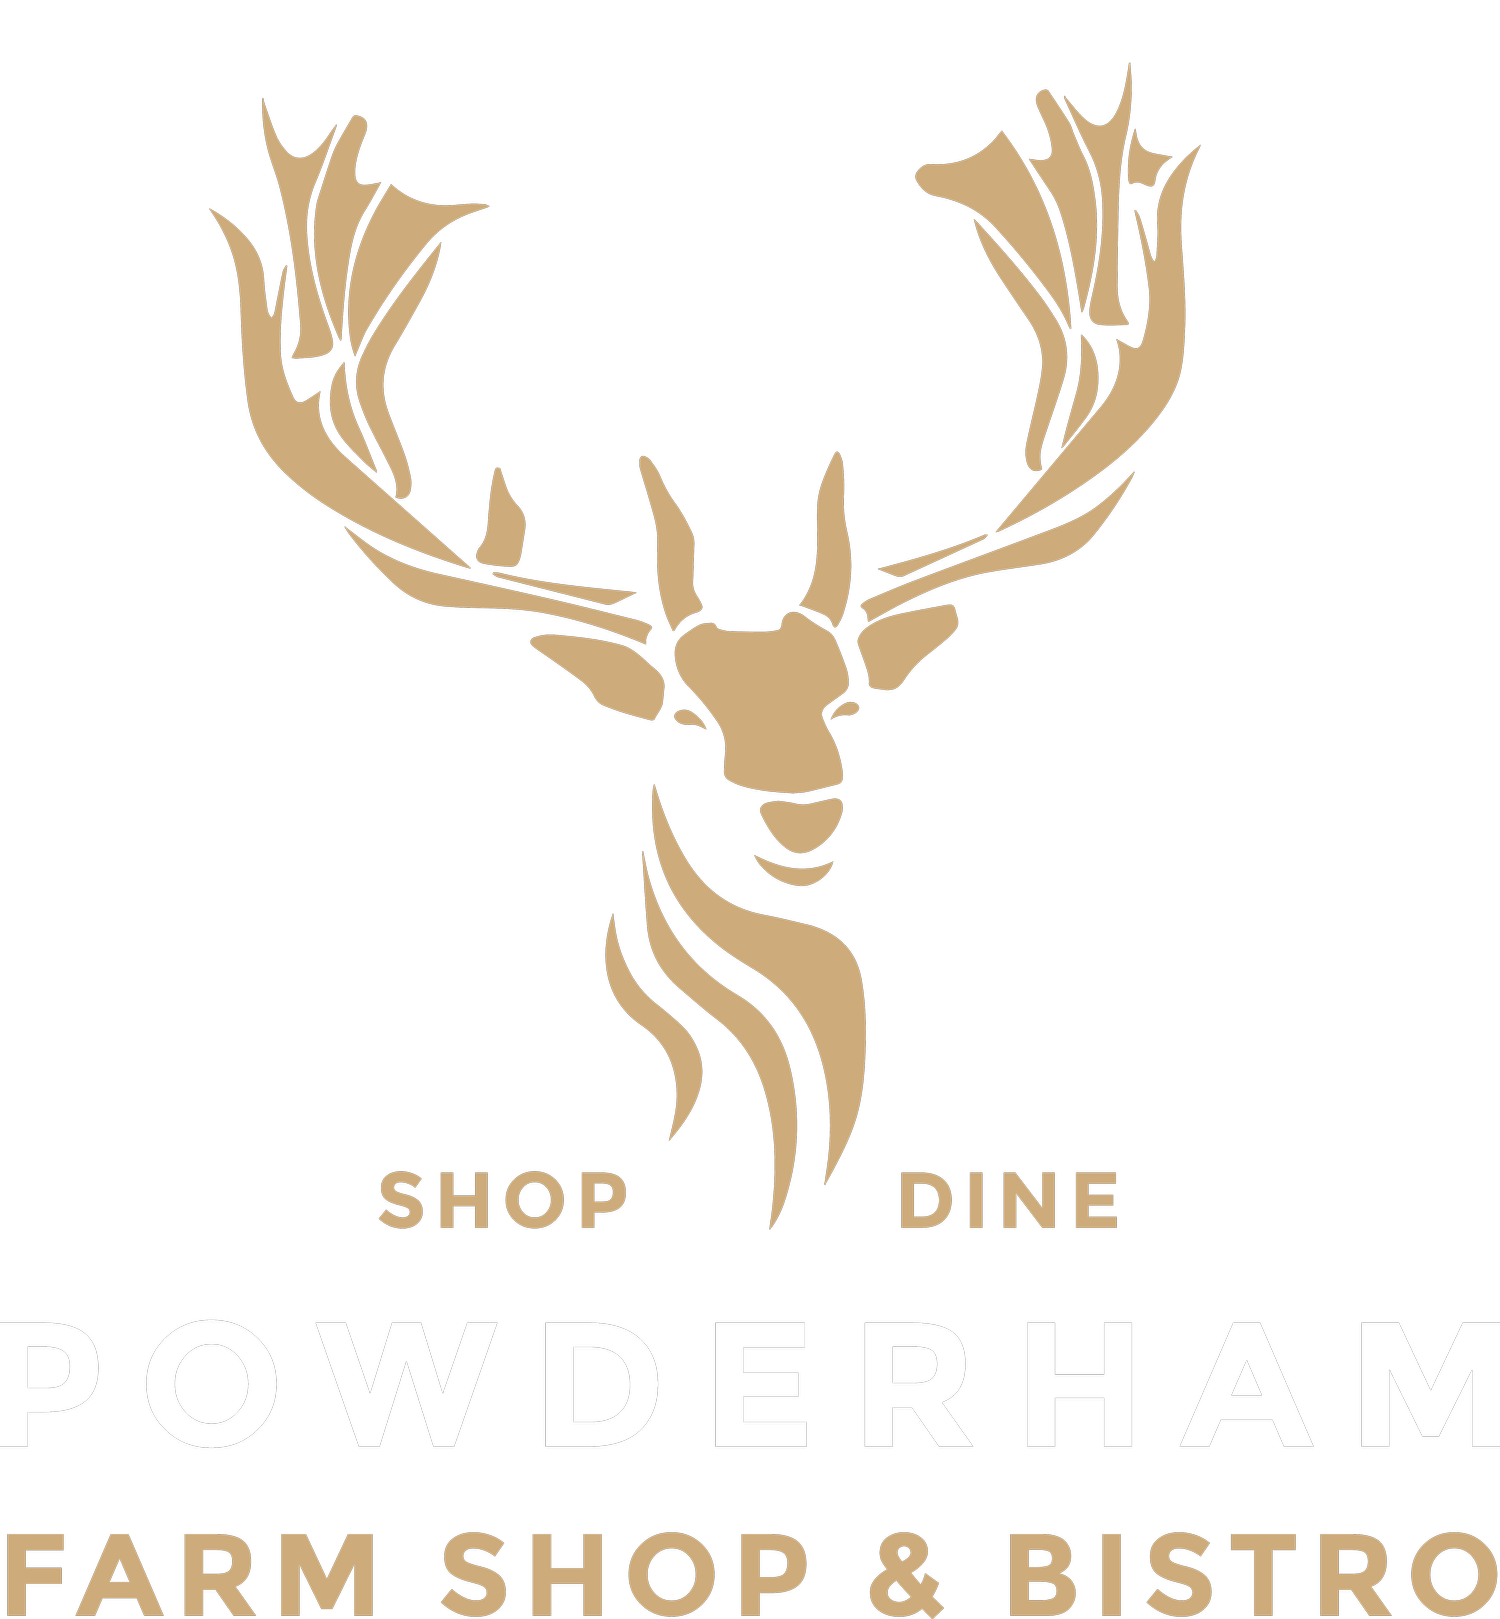 Powderham Farm Shop